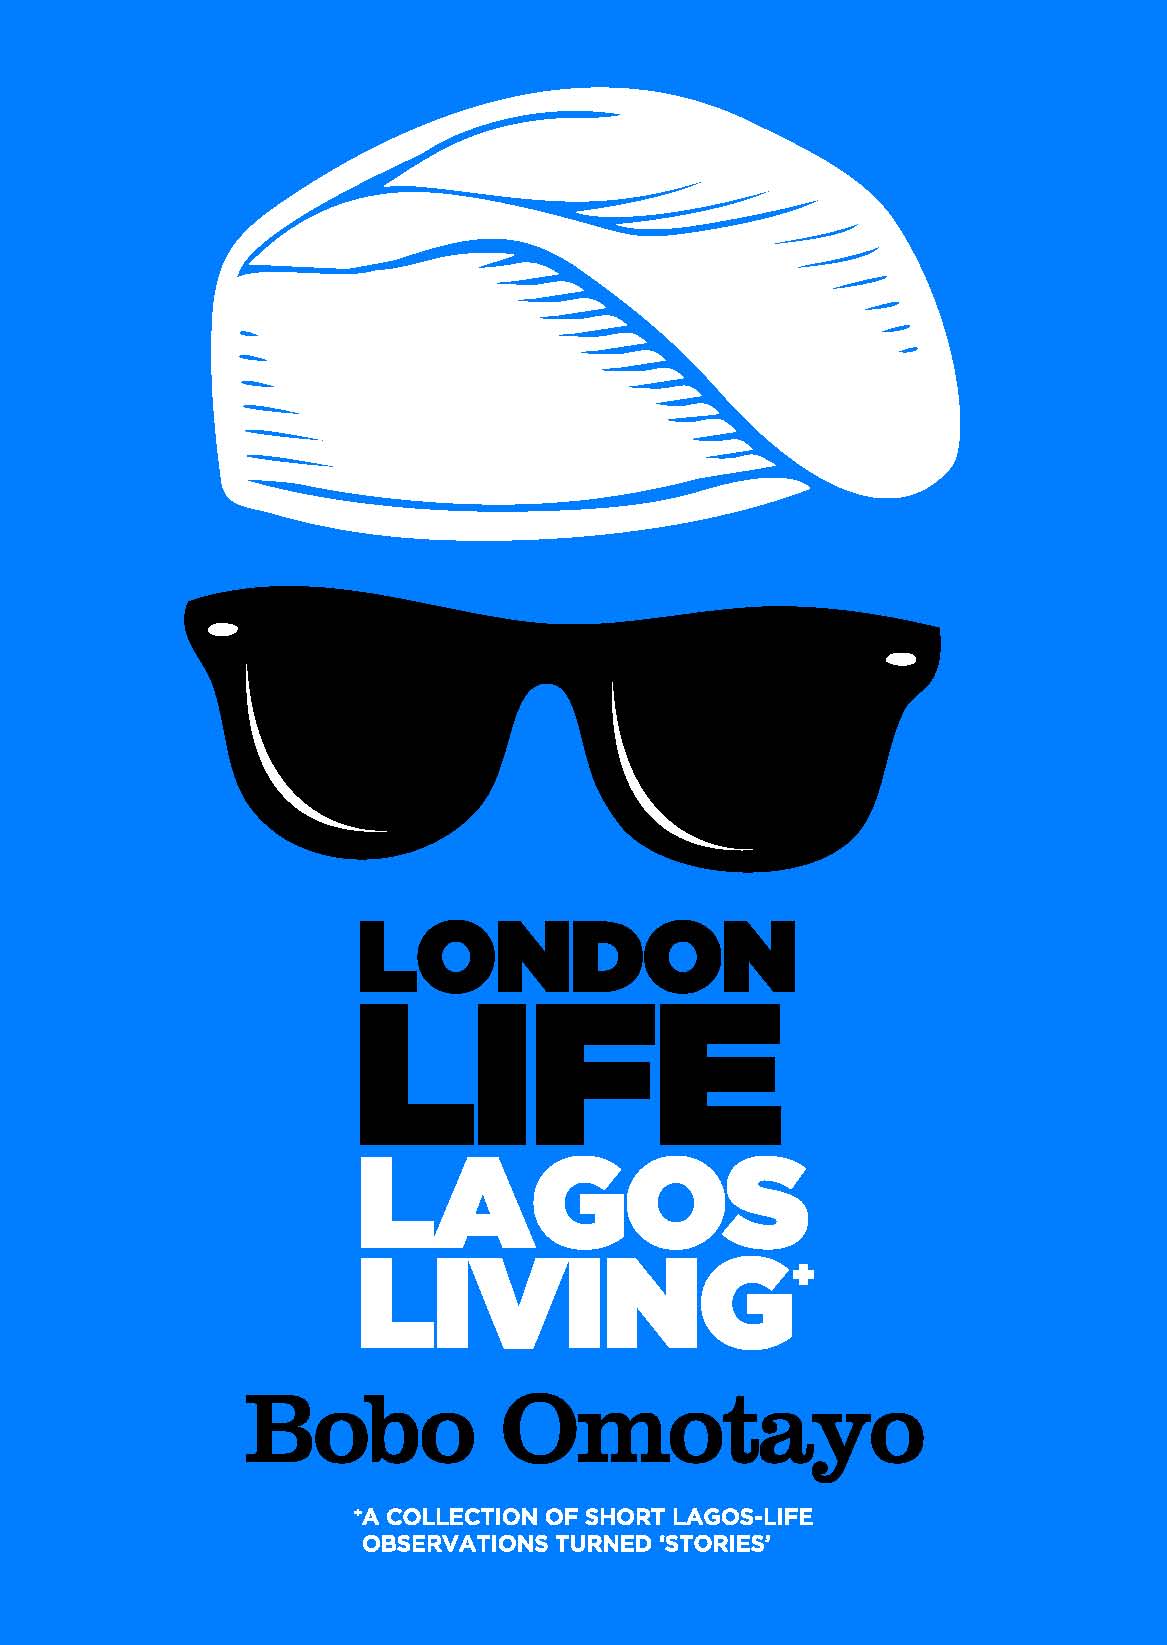 [Reading List] London Life Lagos Living by Bobo Omotayo